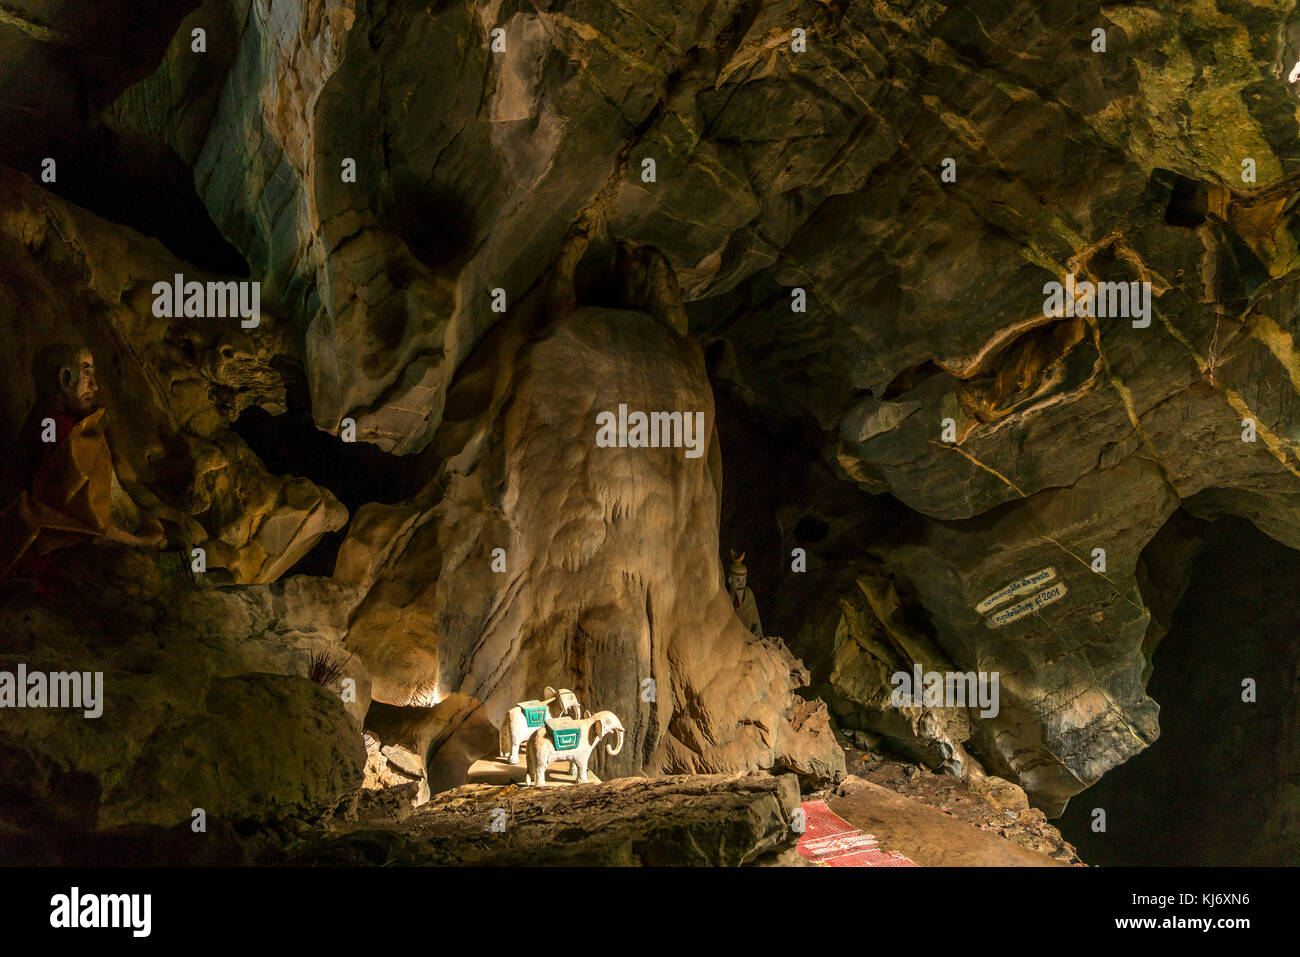 Höhle mit weissen Elefarten Grotta dell'Elefante Bianco am Tempel Phnom Sasear bei Kampot, Kambodscha, Asien | Grotta dell'elefante bianco, Phnom Sasear, vicino a Kampot Foto Stock